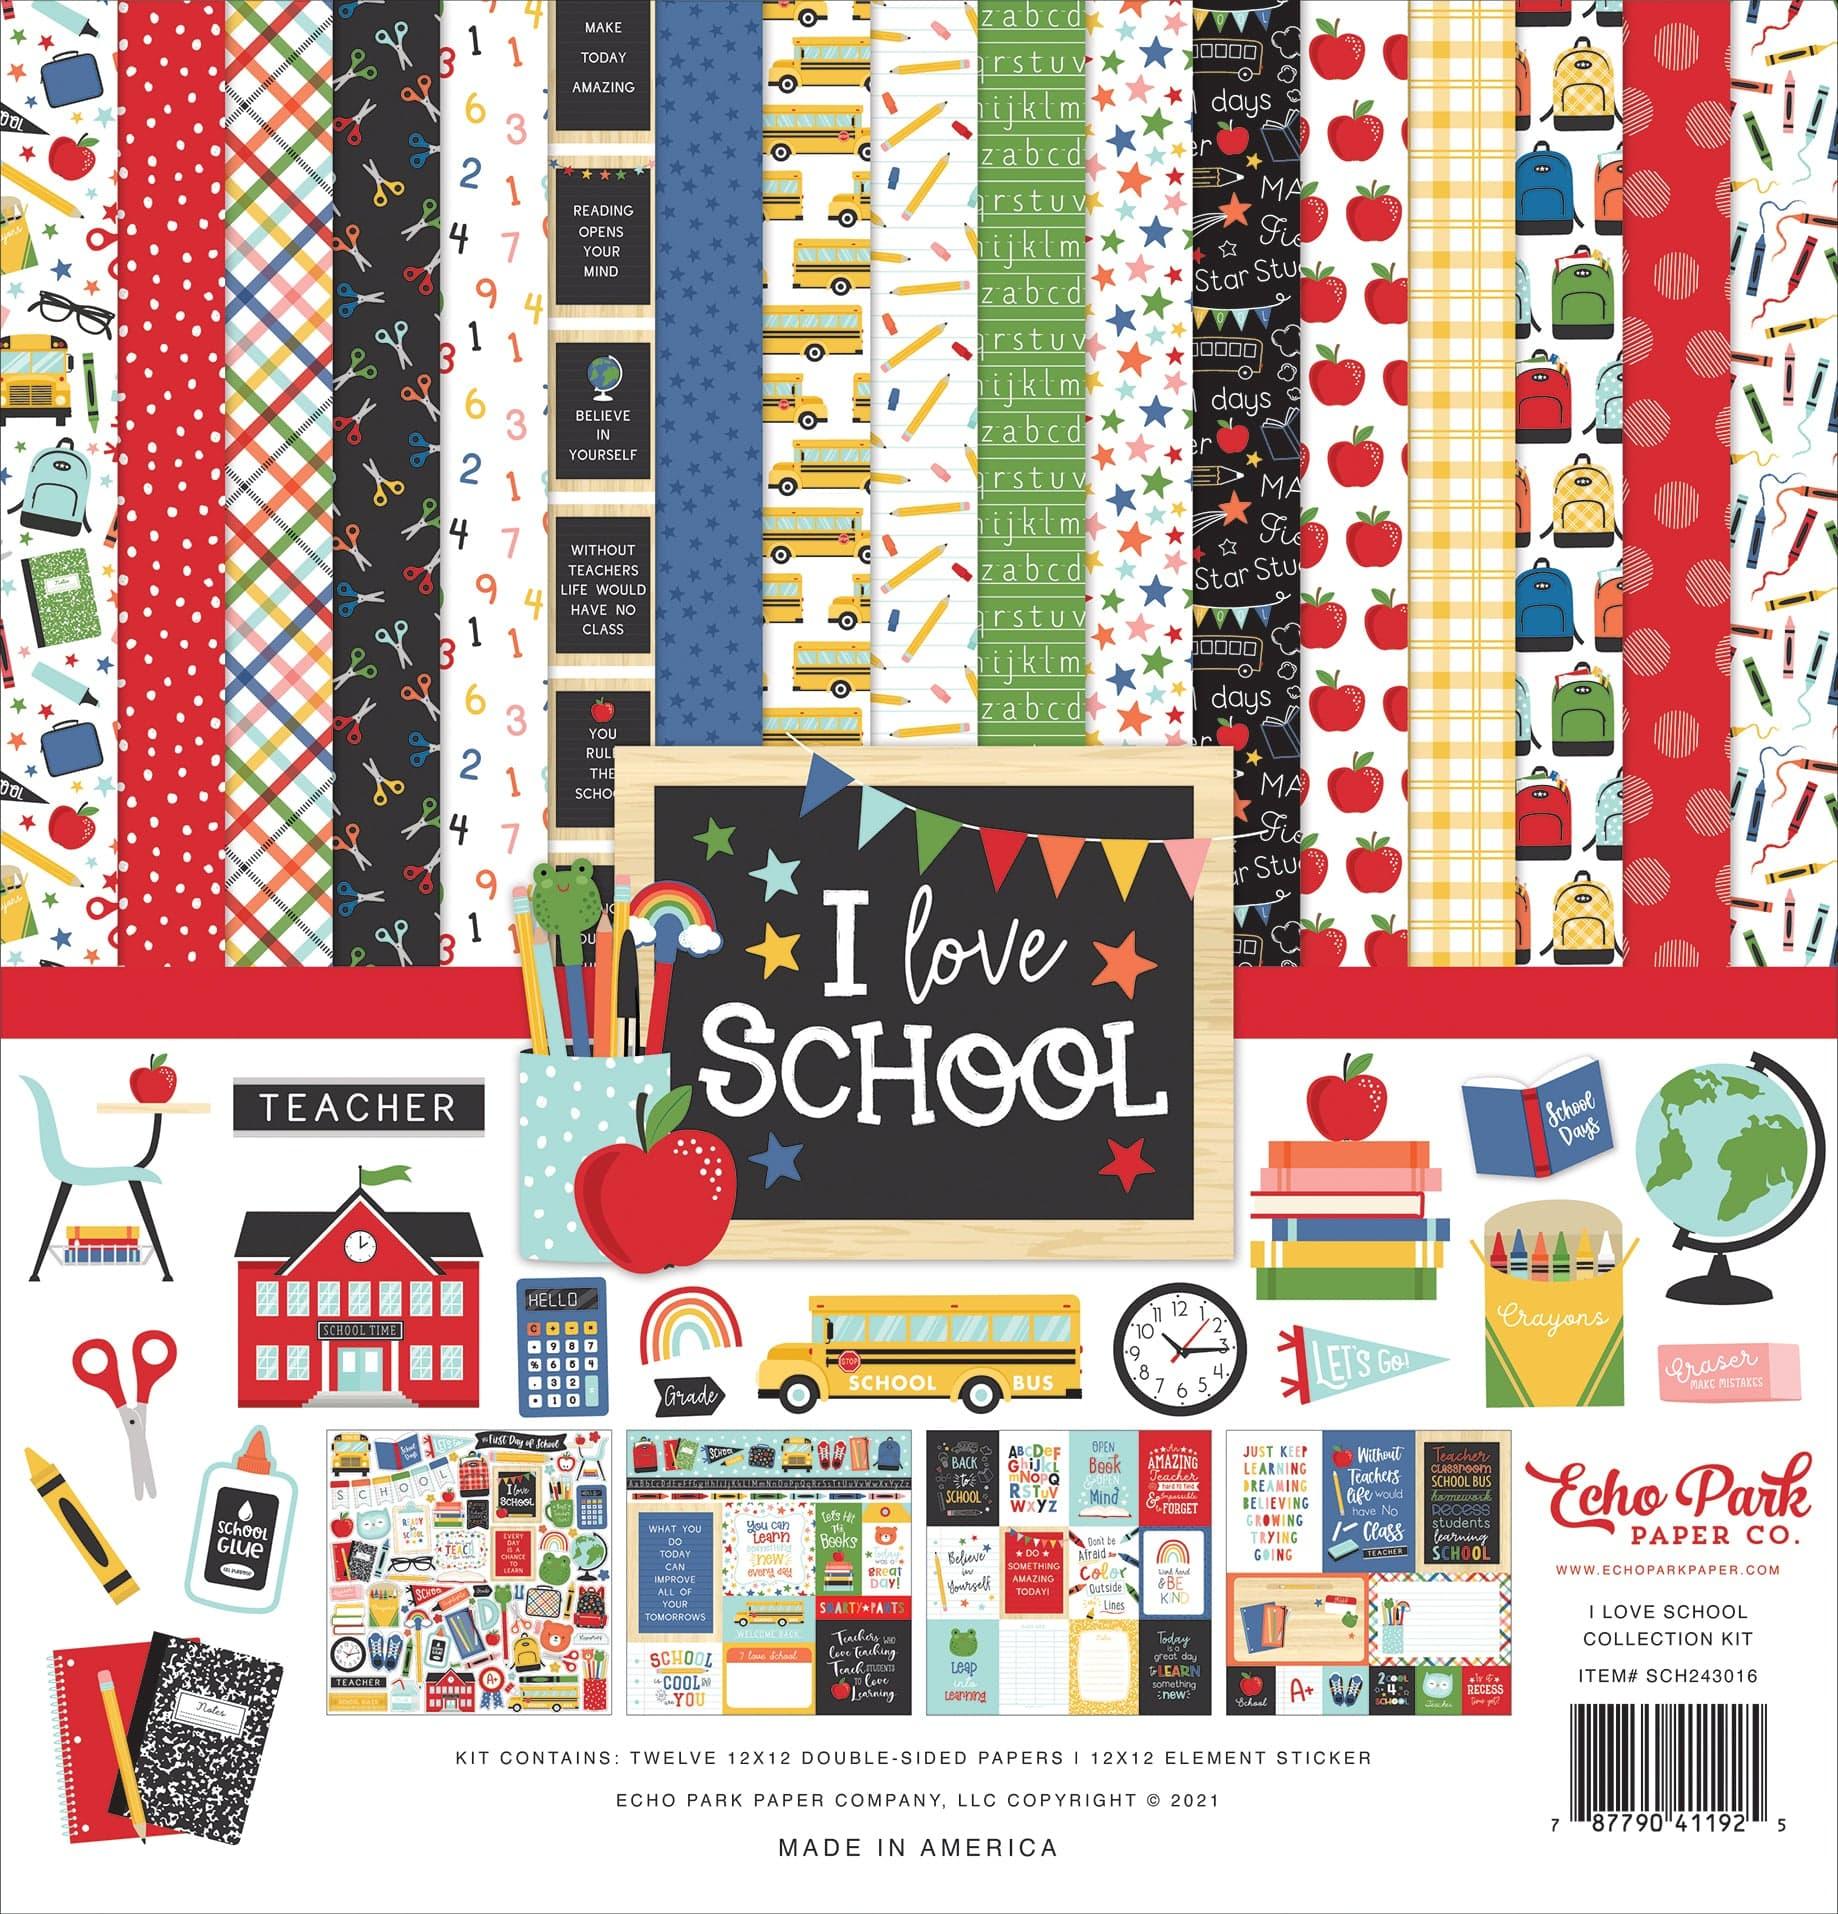 SSC Designs | Coffee Lover Scrapbook Paper Pack & Embellishment Kit